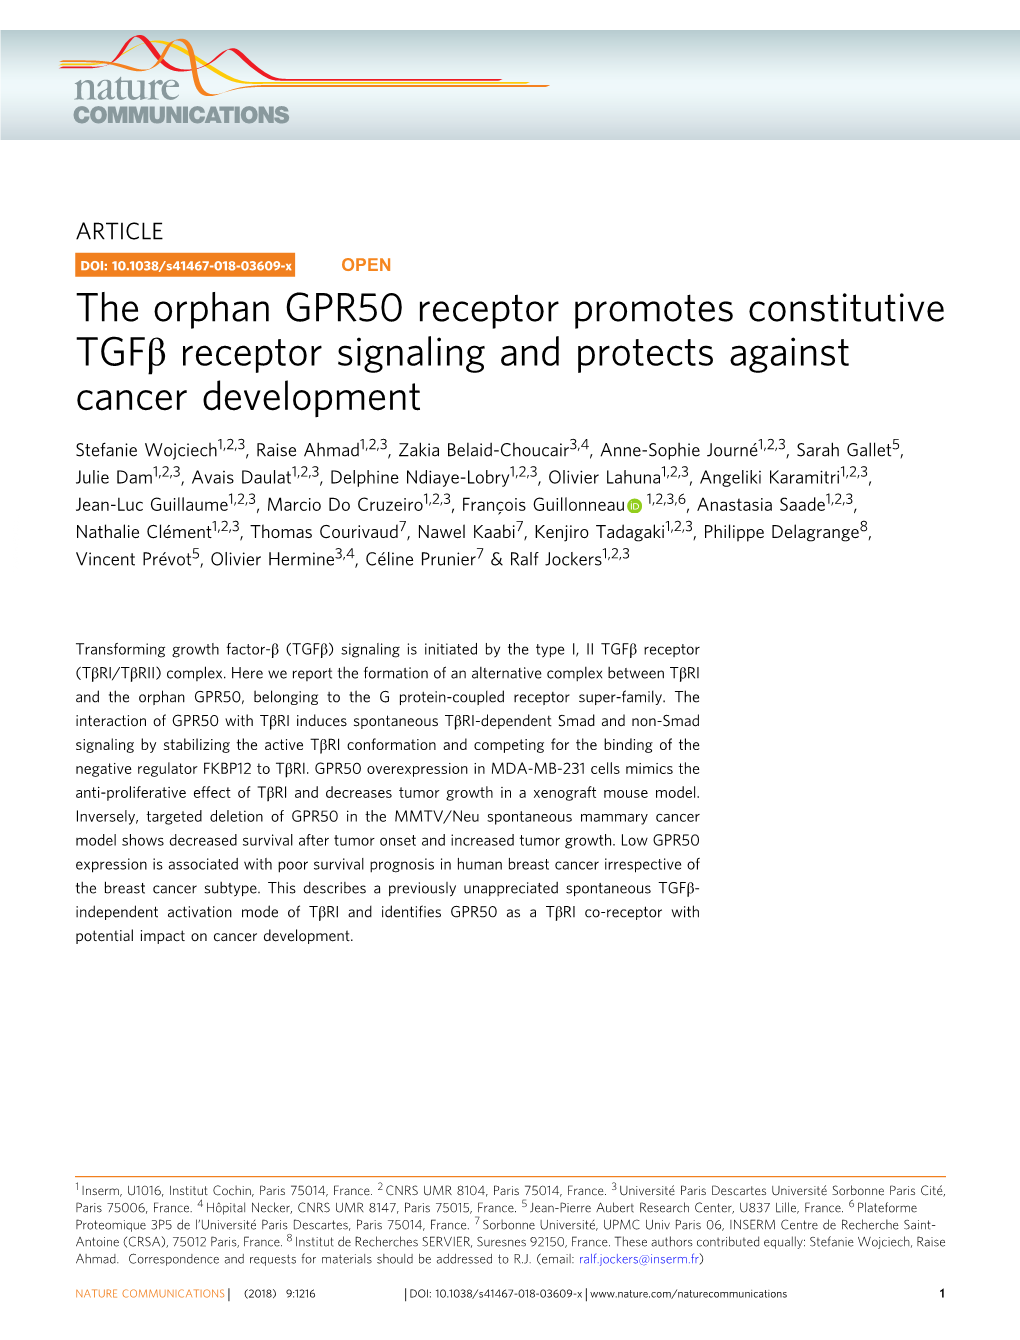 The Orphan GPR50 Receptor Promotes Constitutive TGFÎ² Receptor